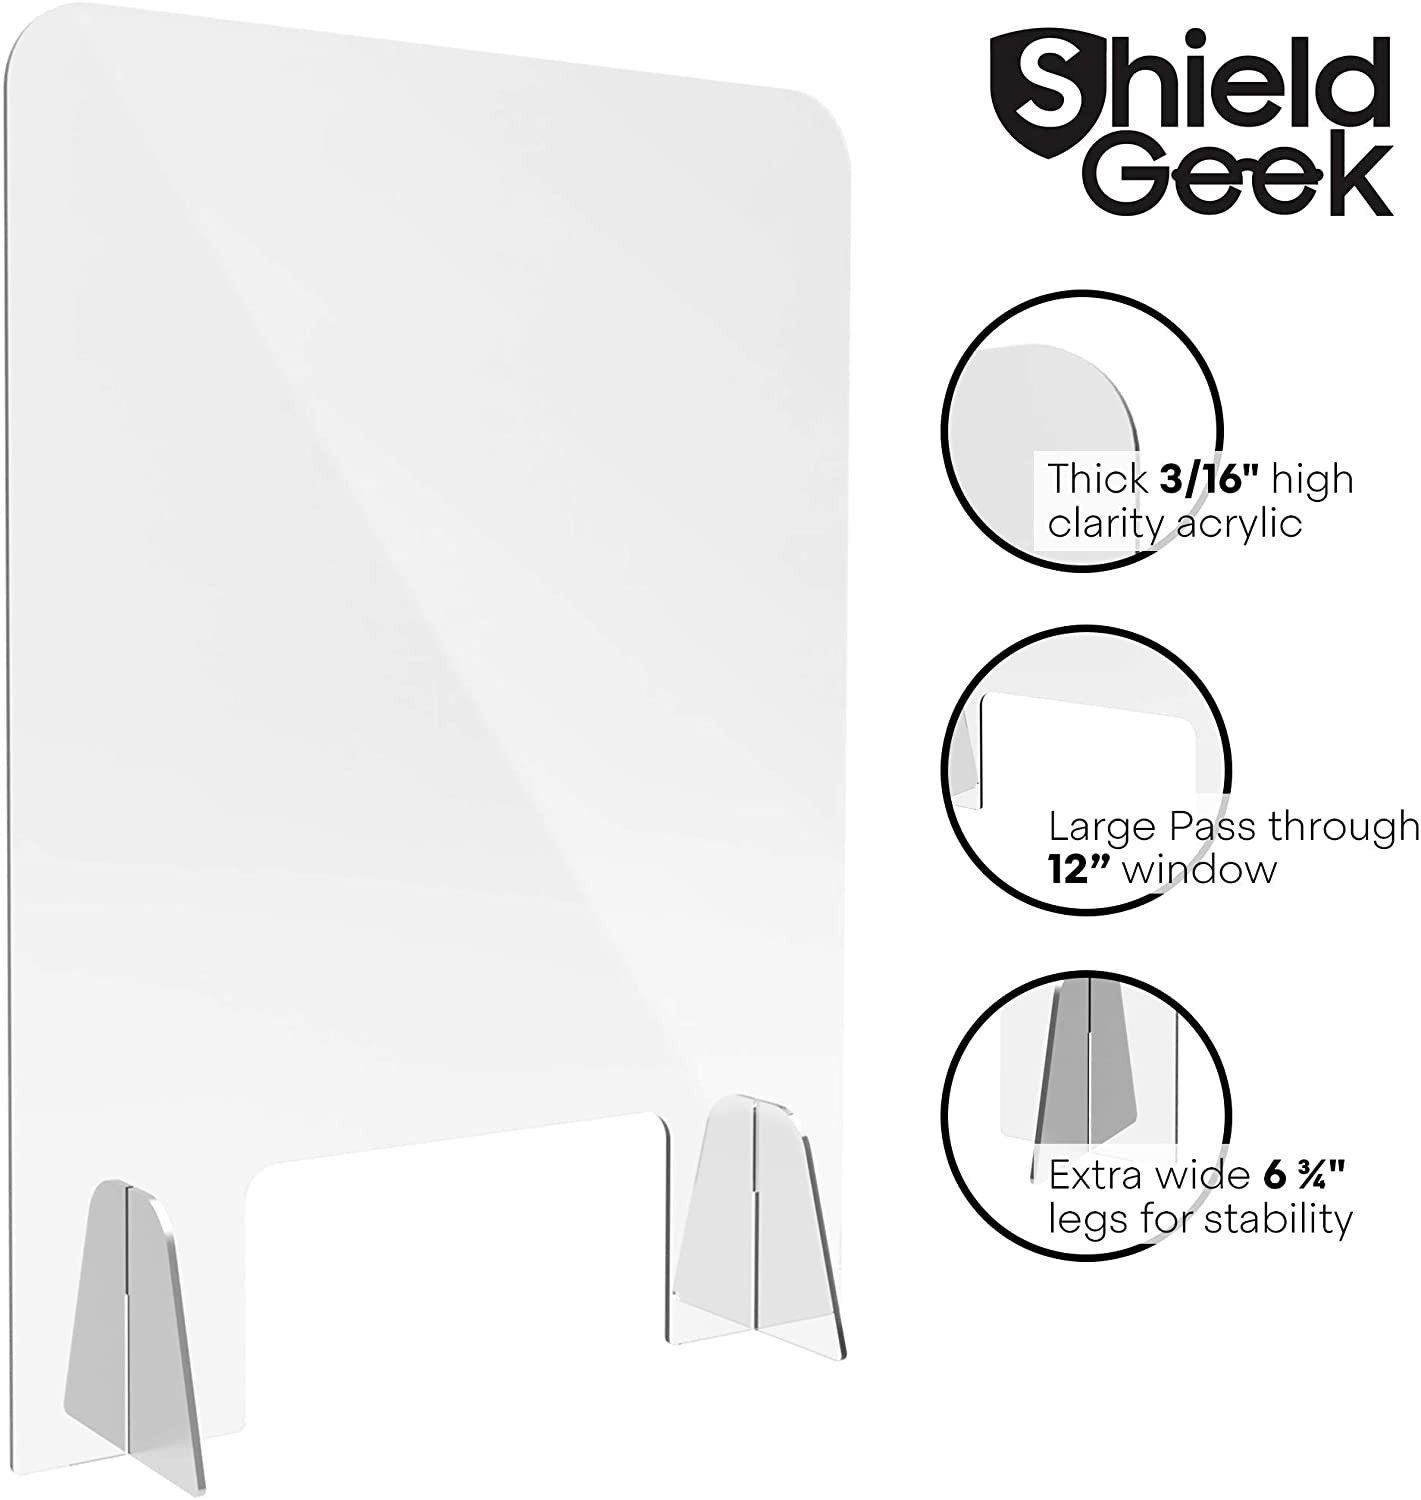 Shield Geek Sneeze Guard for Counter Freestanding Plexiglass Shield 24x32"